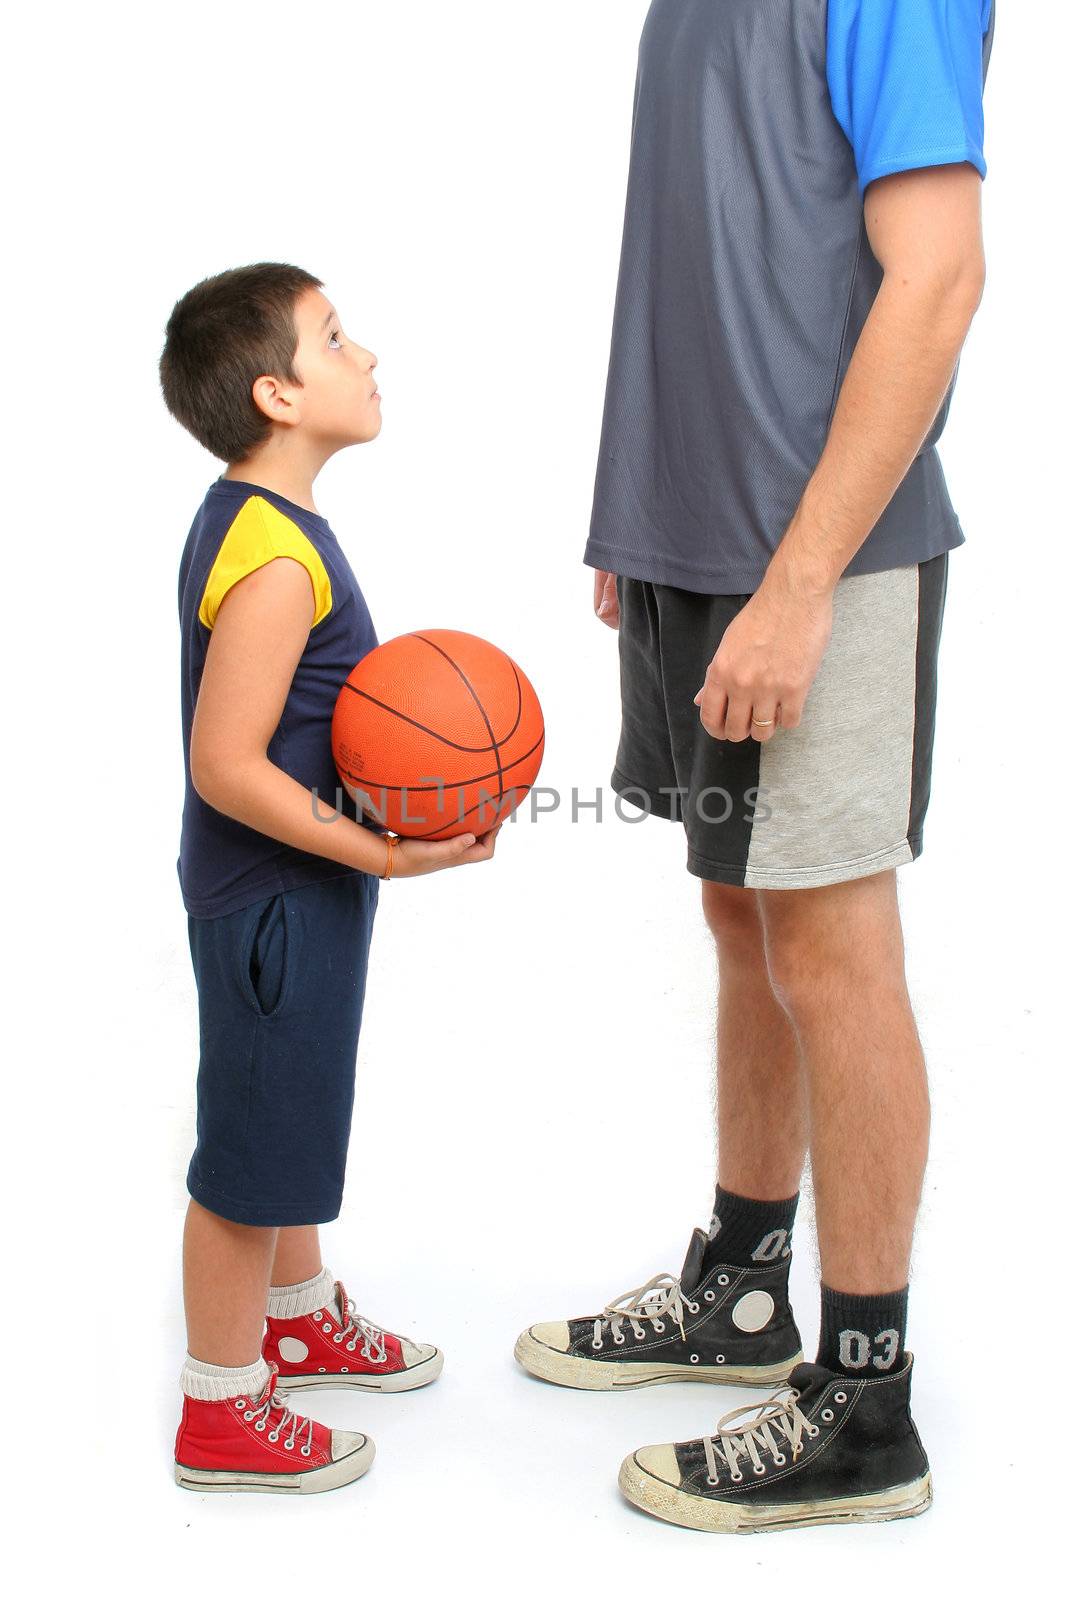 little boy asking big man to play basketball  by Erdosain